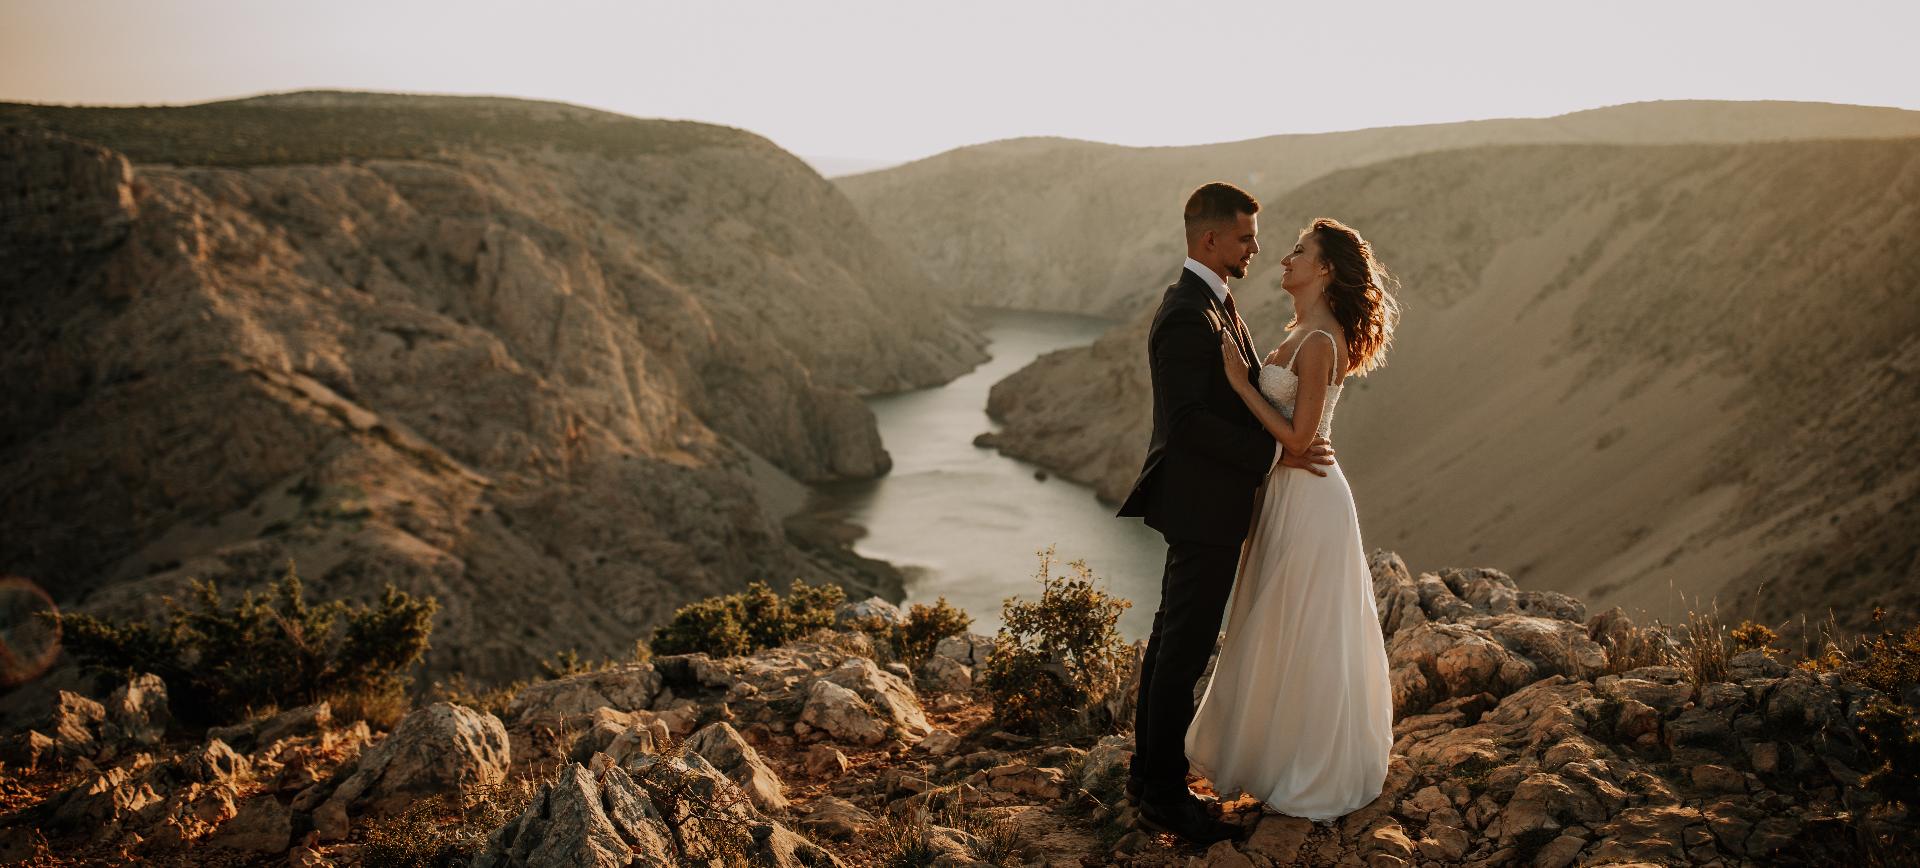 elope to croatia hiking wedding in the mediterranean